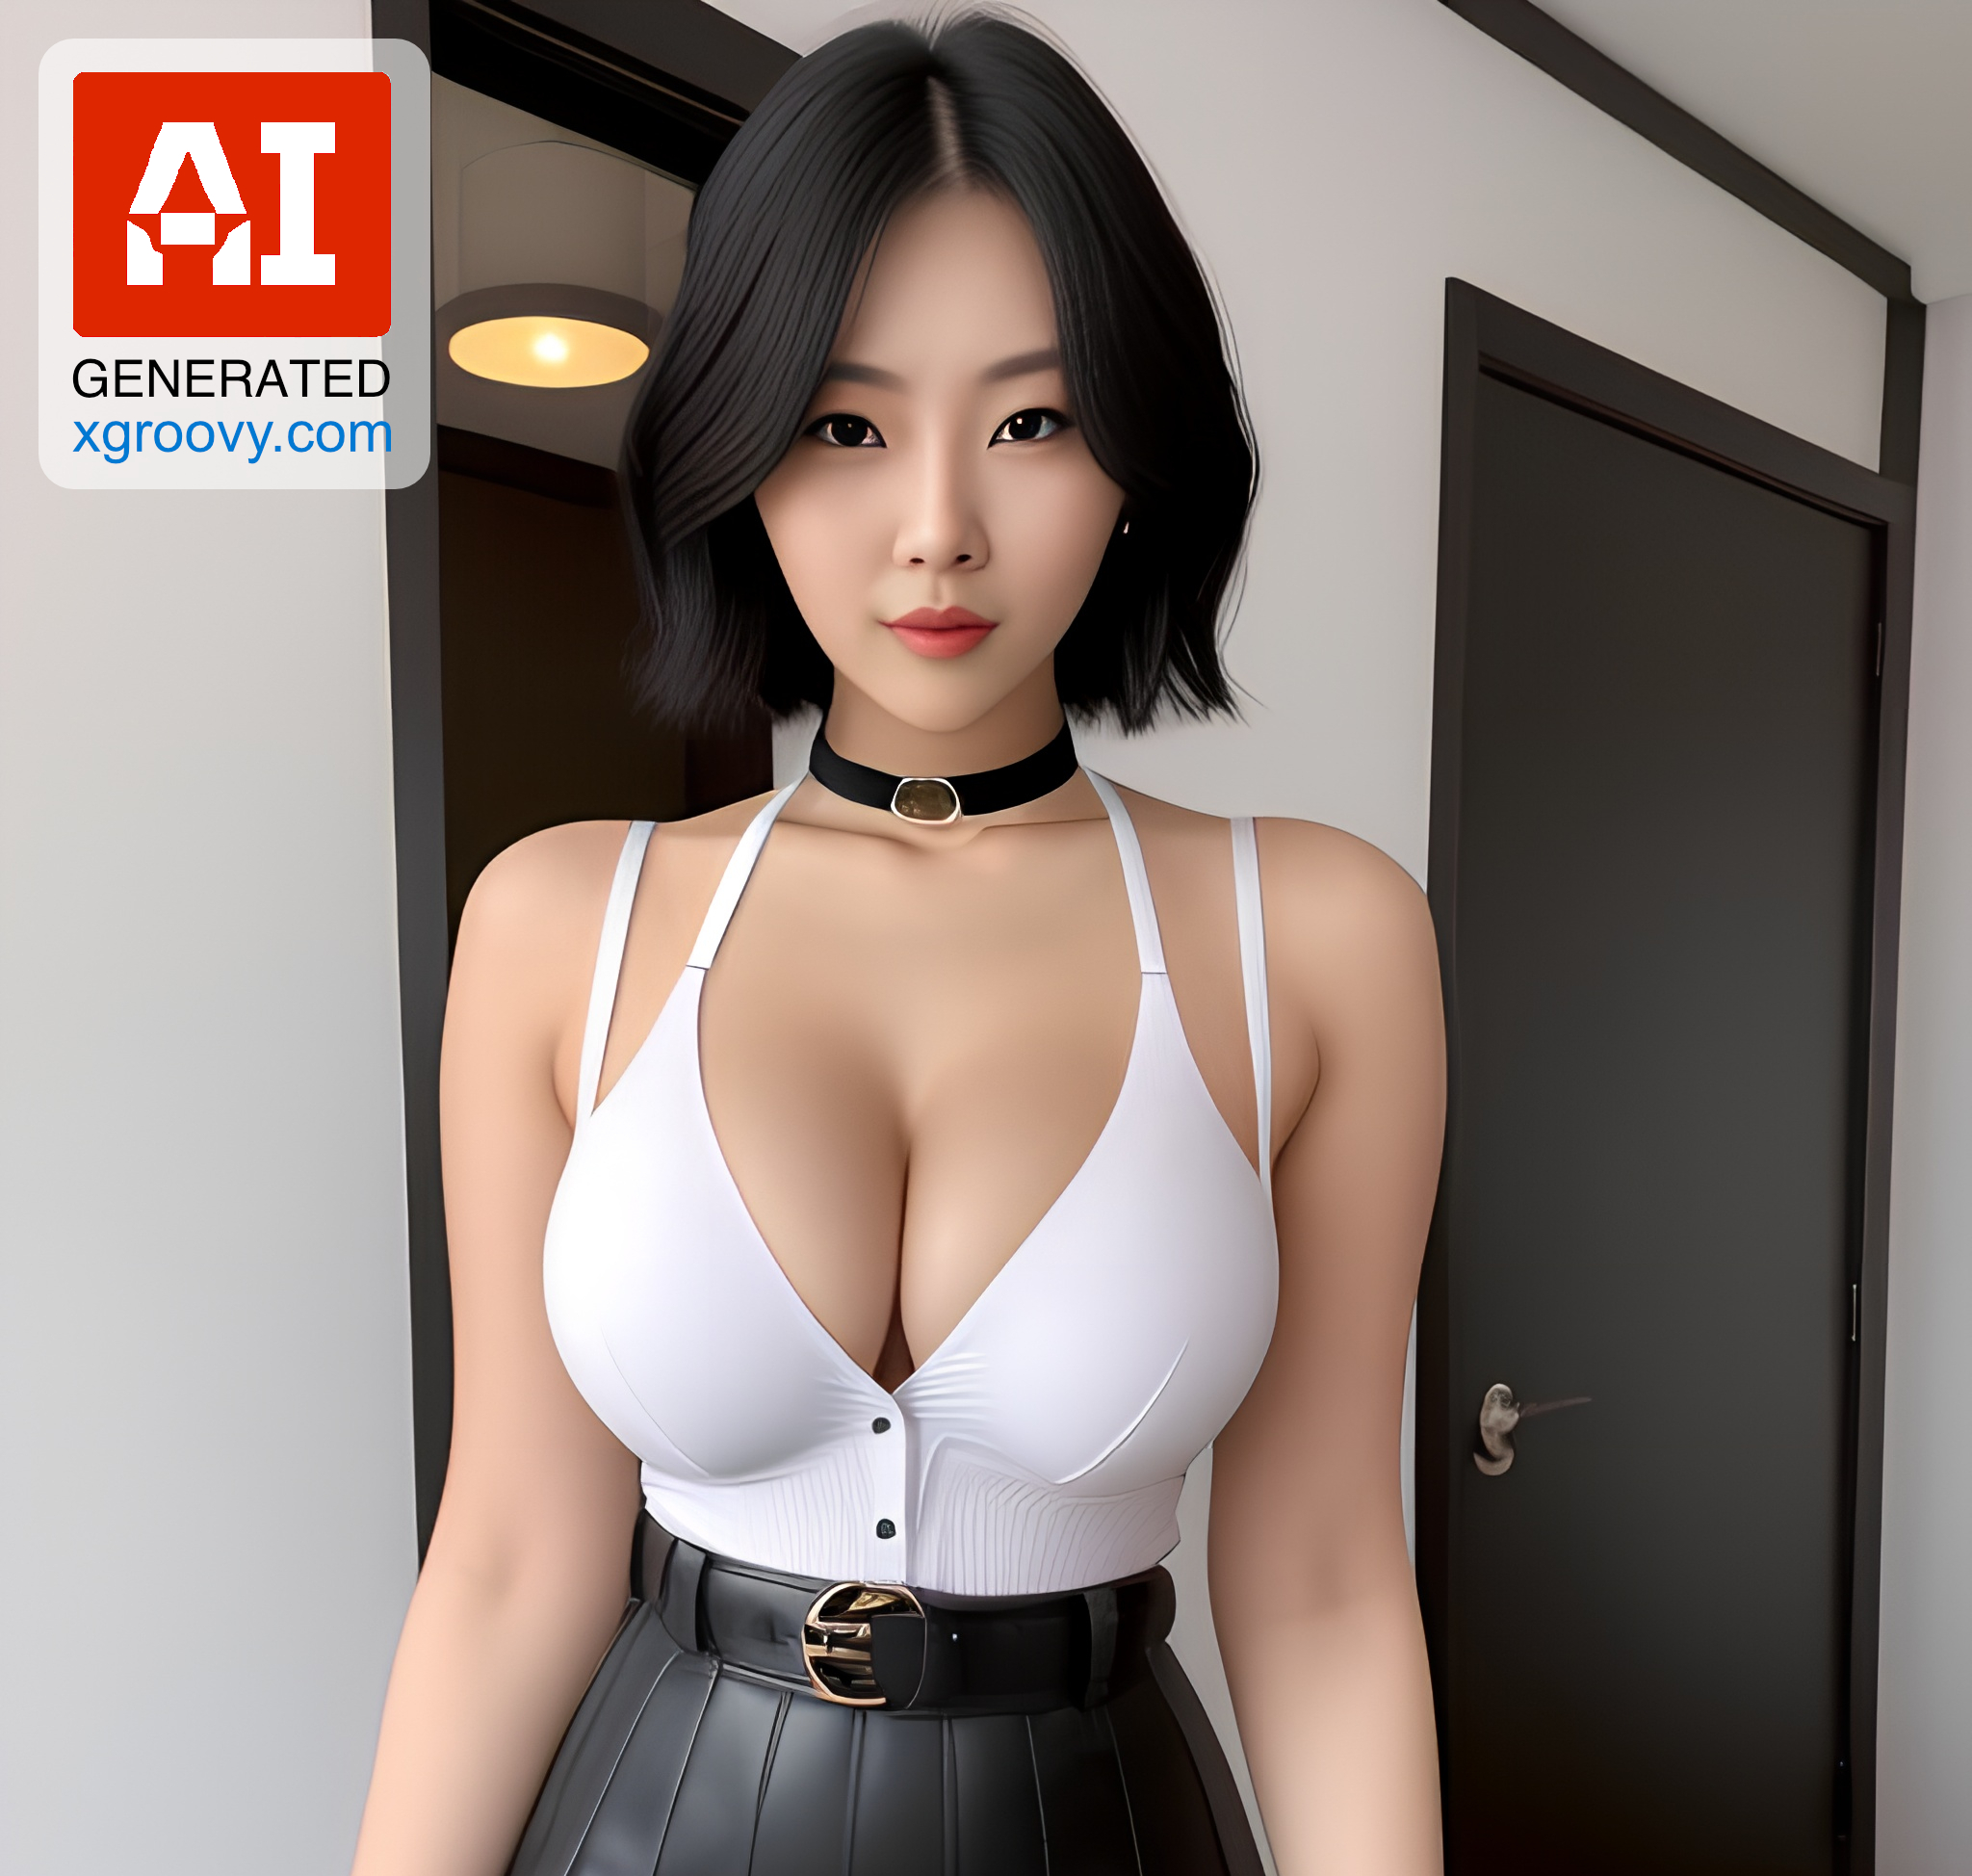 Korean Perfect - Korean beauty, short hair, big hips, perfect body in a mini skirt & choker.  I'd